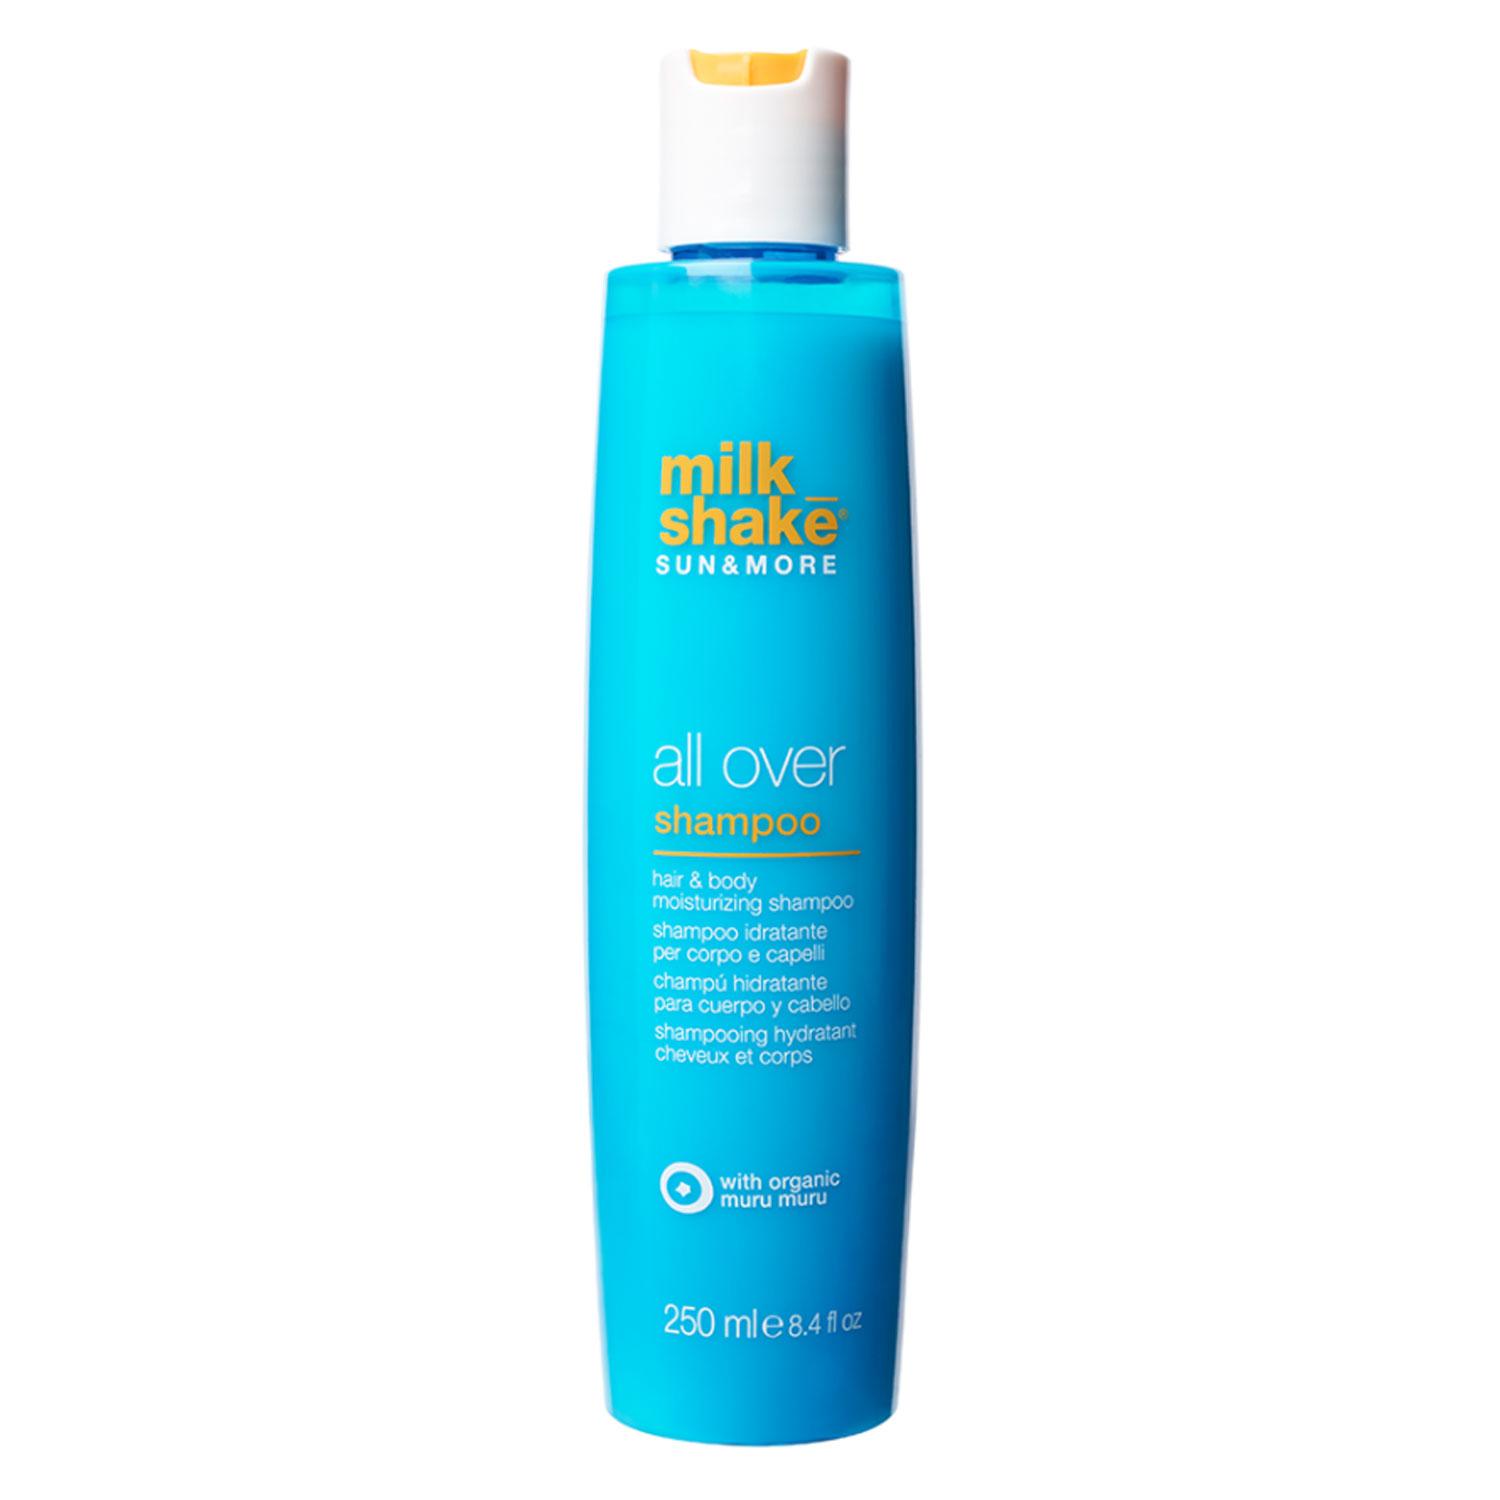 milk_shake sun&more - all over shampoo